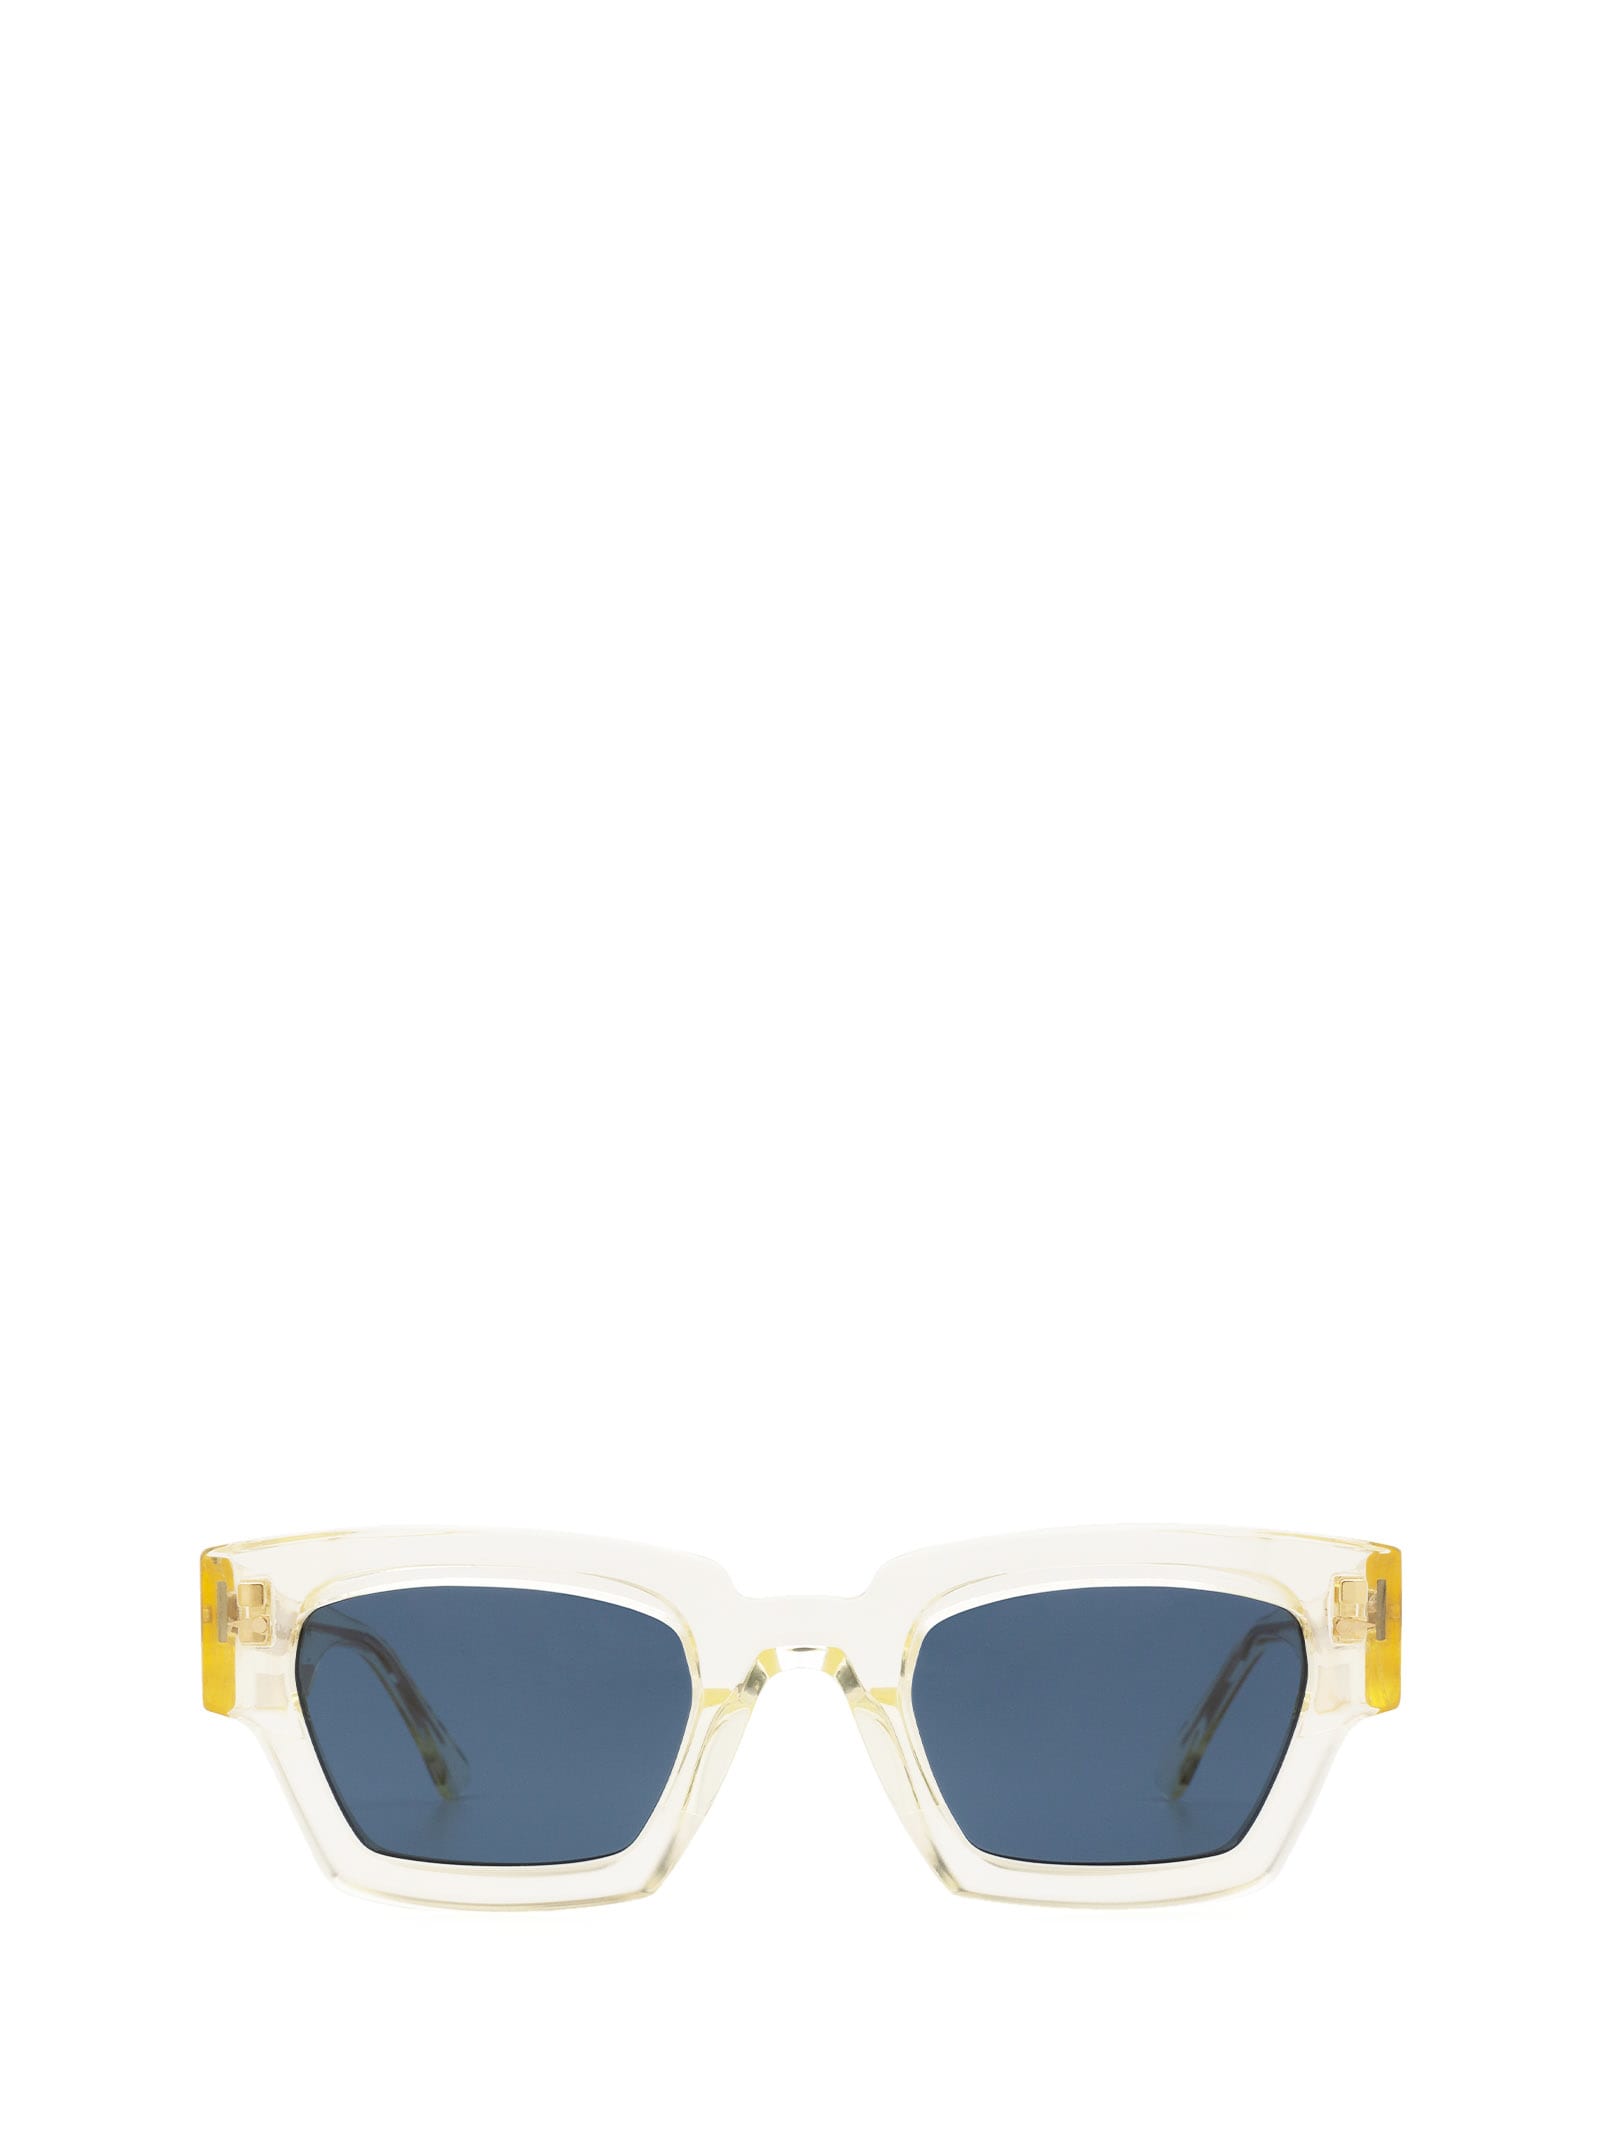 AHLEM Ahlem Villette Gold Light Sunglasses